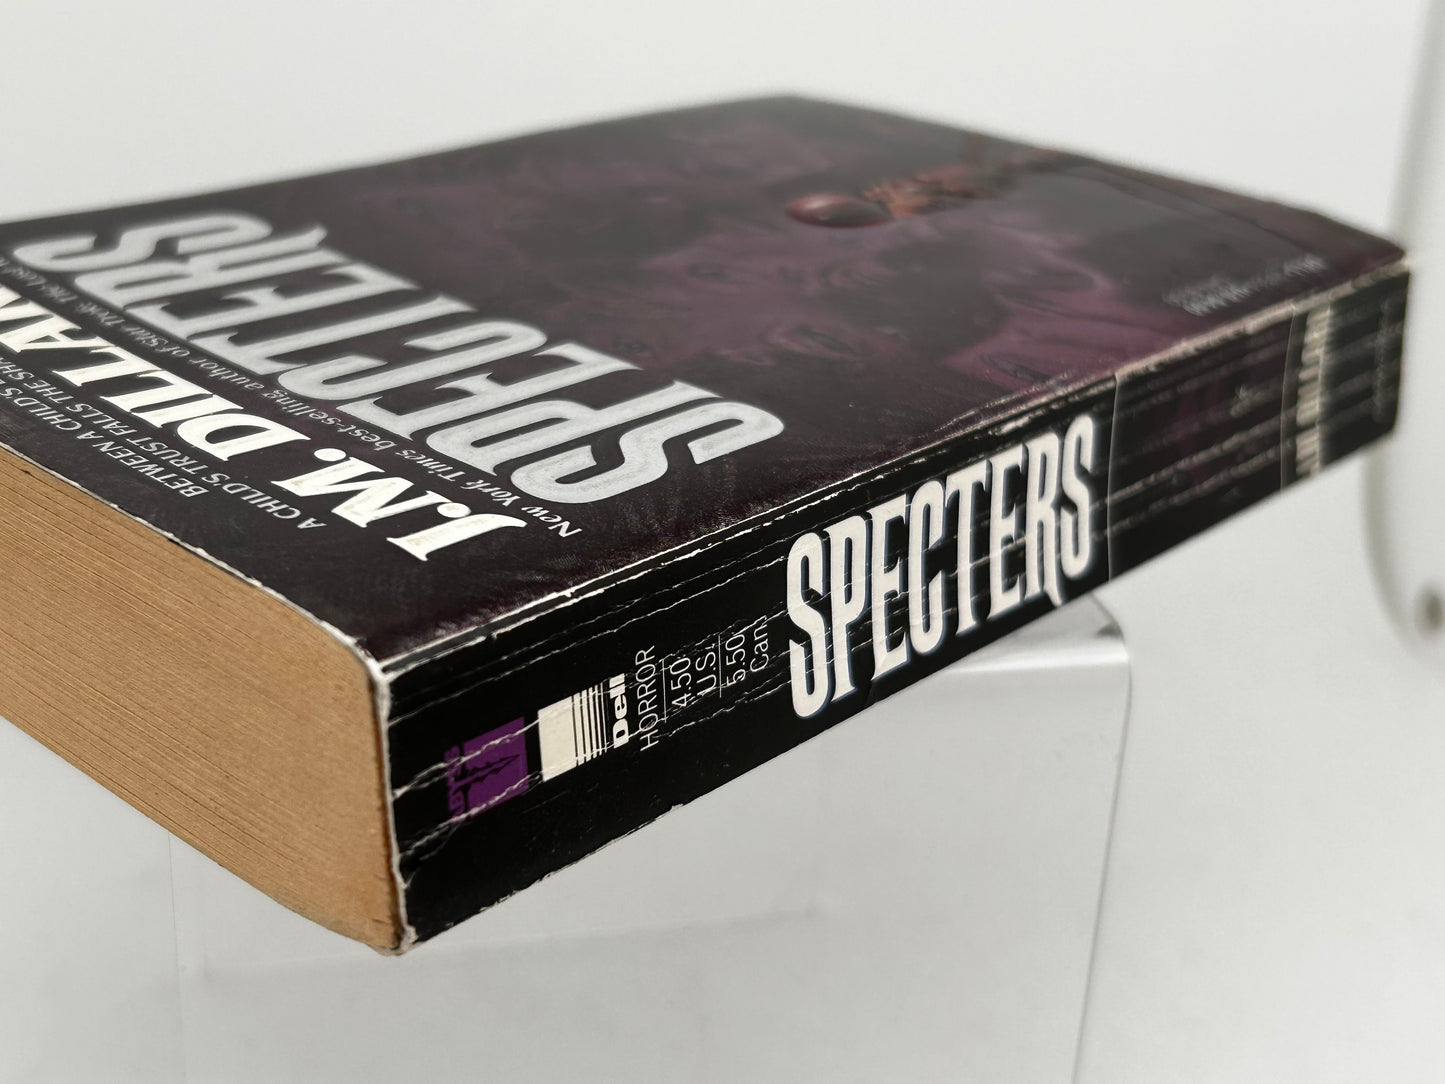 Specters DELL Paperback J.M. Dillard SF12